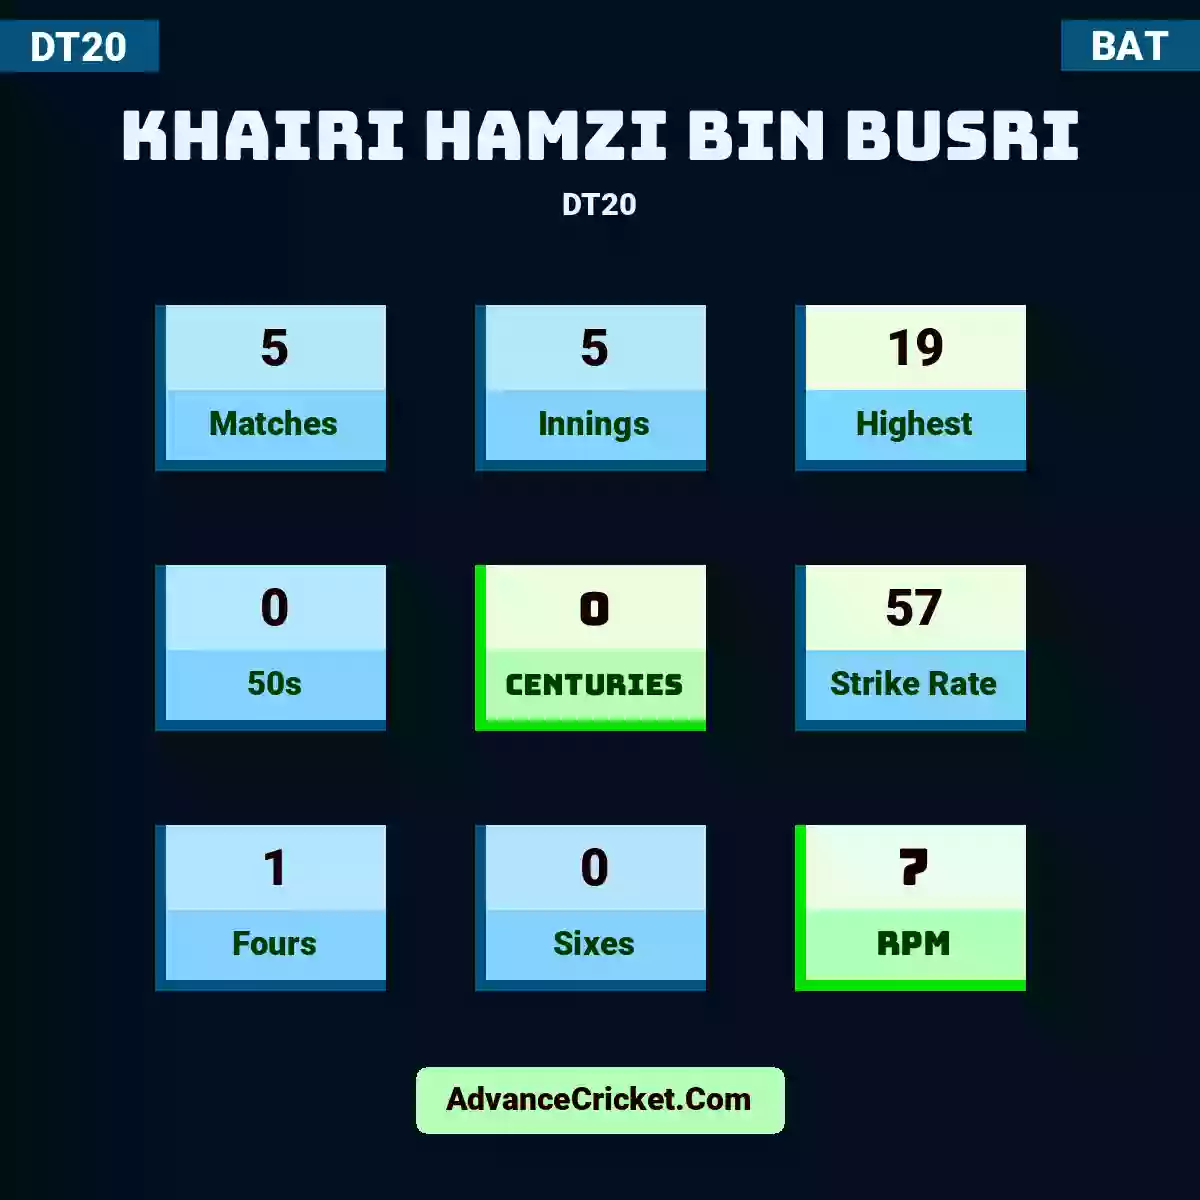 Khairi Hamzi Bin Busri DT20 , Khairi Hamzi Bin Busri played 5 matches, scored 19 runs as highest, 0 half-centuries, and 0 centuries, with a strike rate of 57. K.Hamzi.Bin.Busri hit 1 fours and 0 sixes, with an RPM of 7.